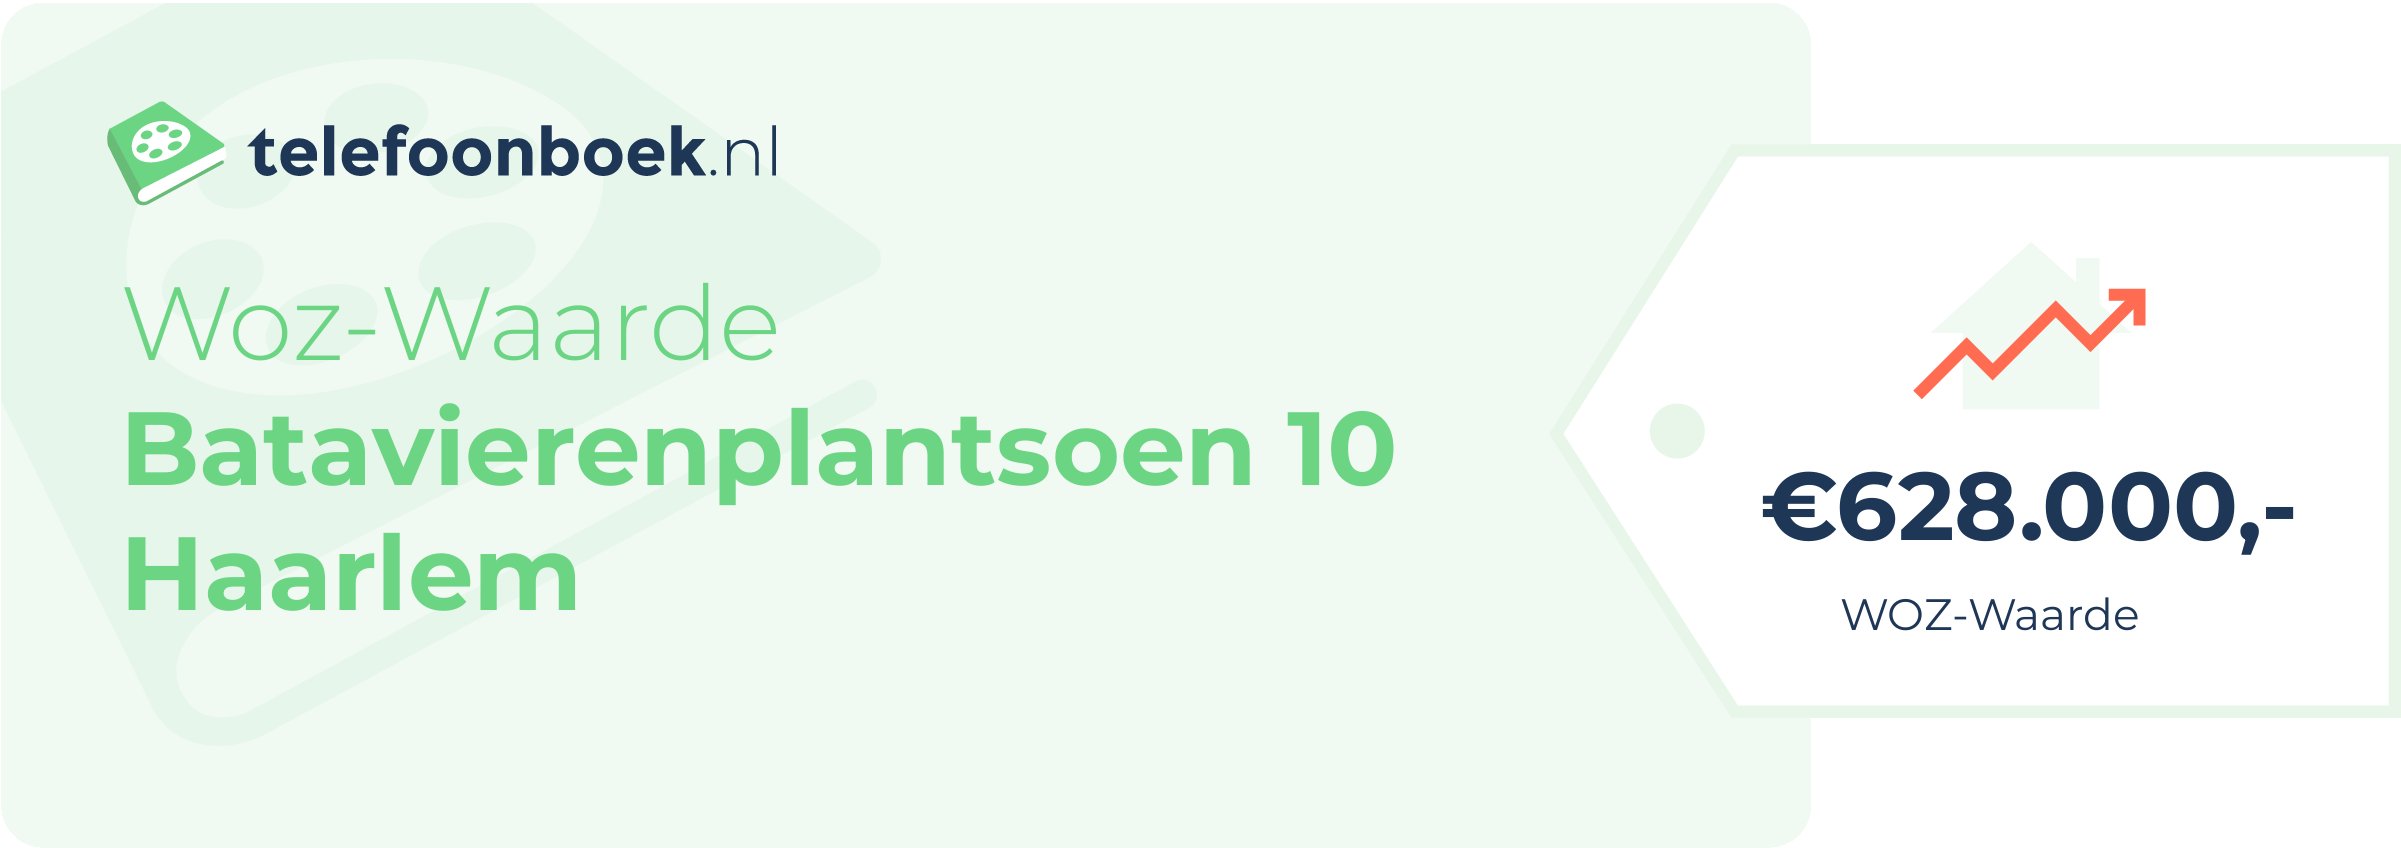 WOZ-waarde Batavierenplantsoen 10 Haarlem